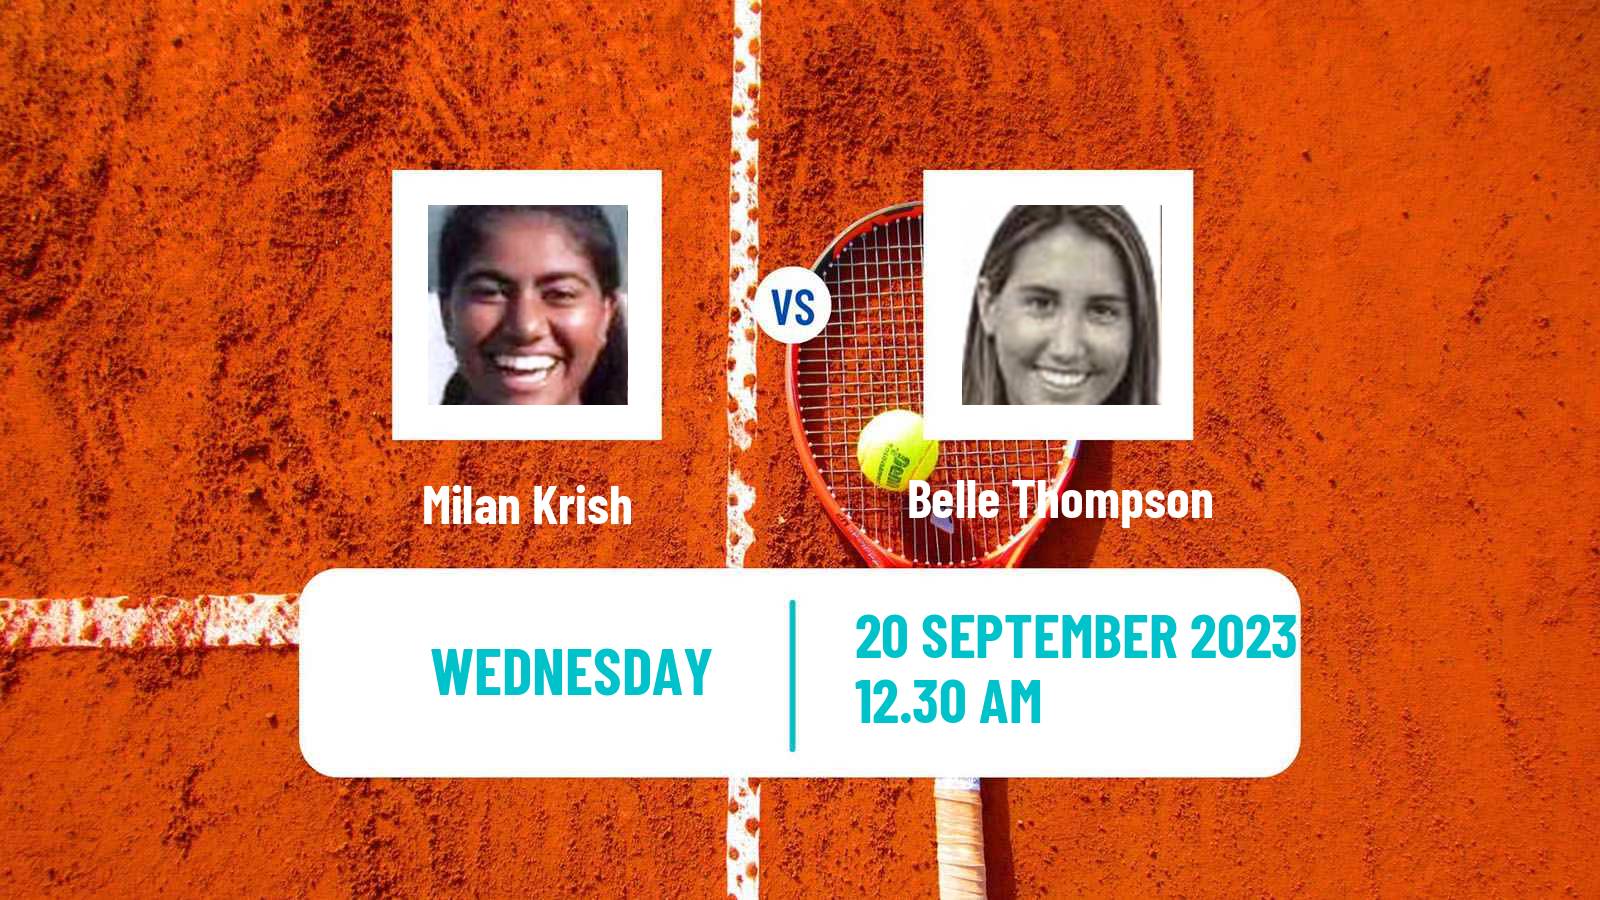 Tennis ITF W25 Perth 2 Women Milan Krish - Belle Thompson